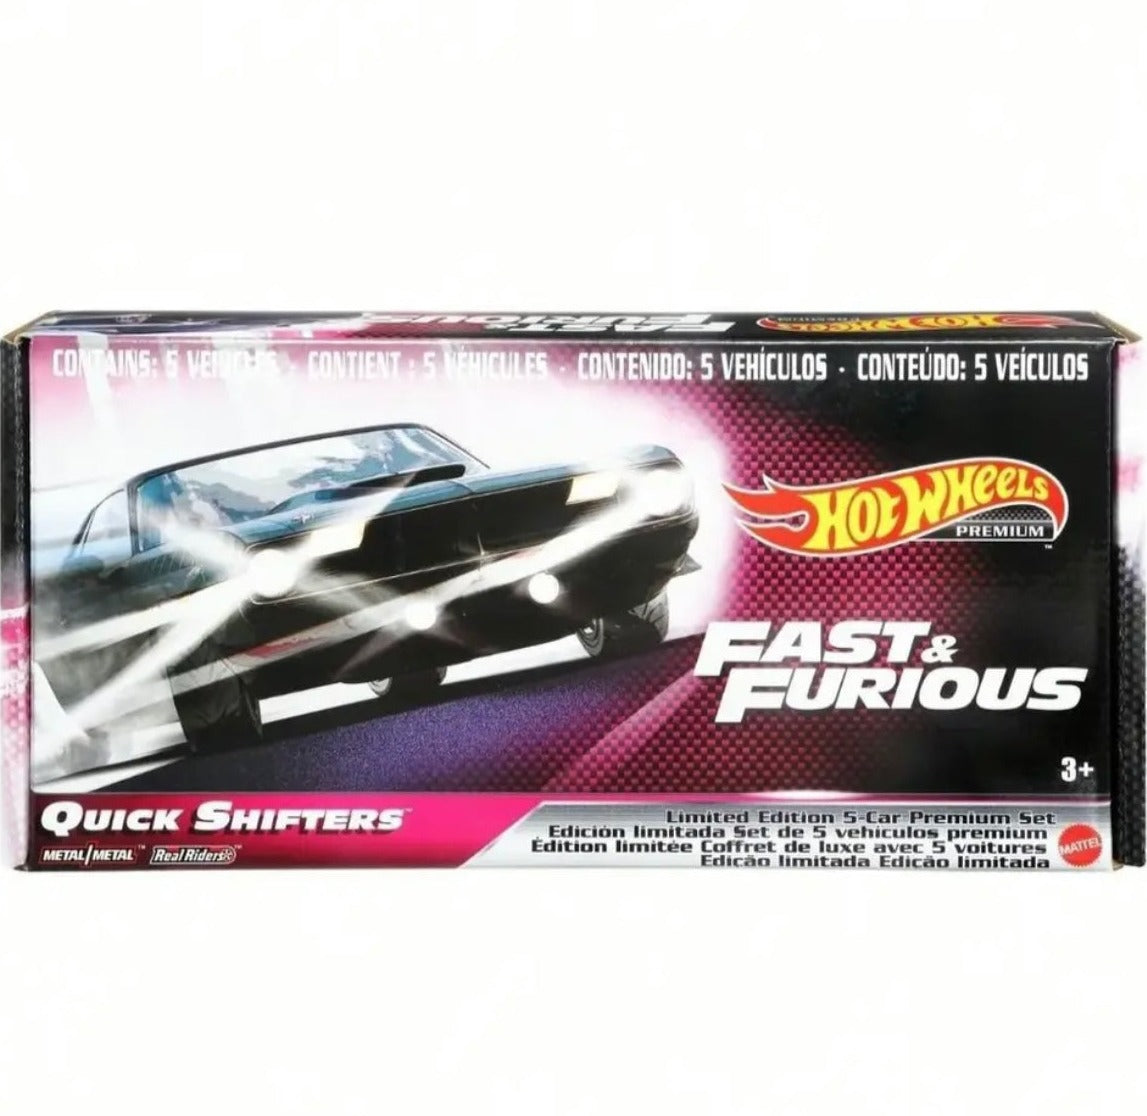 Hotwheels Premium 1:64 Fast & Furious Quick Shifters Set of 5